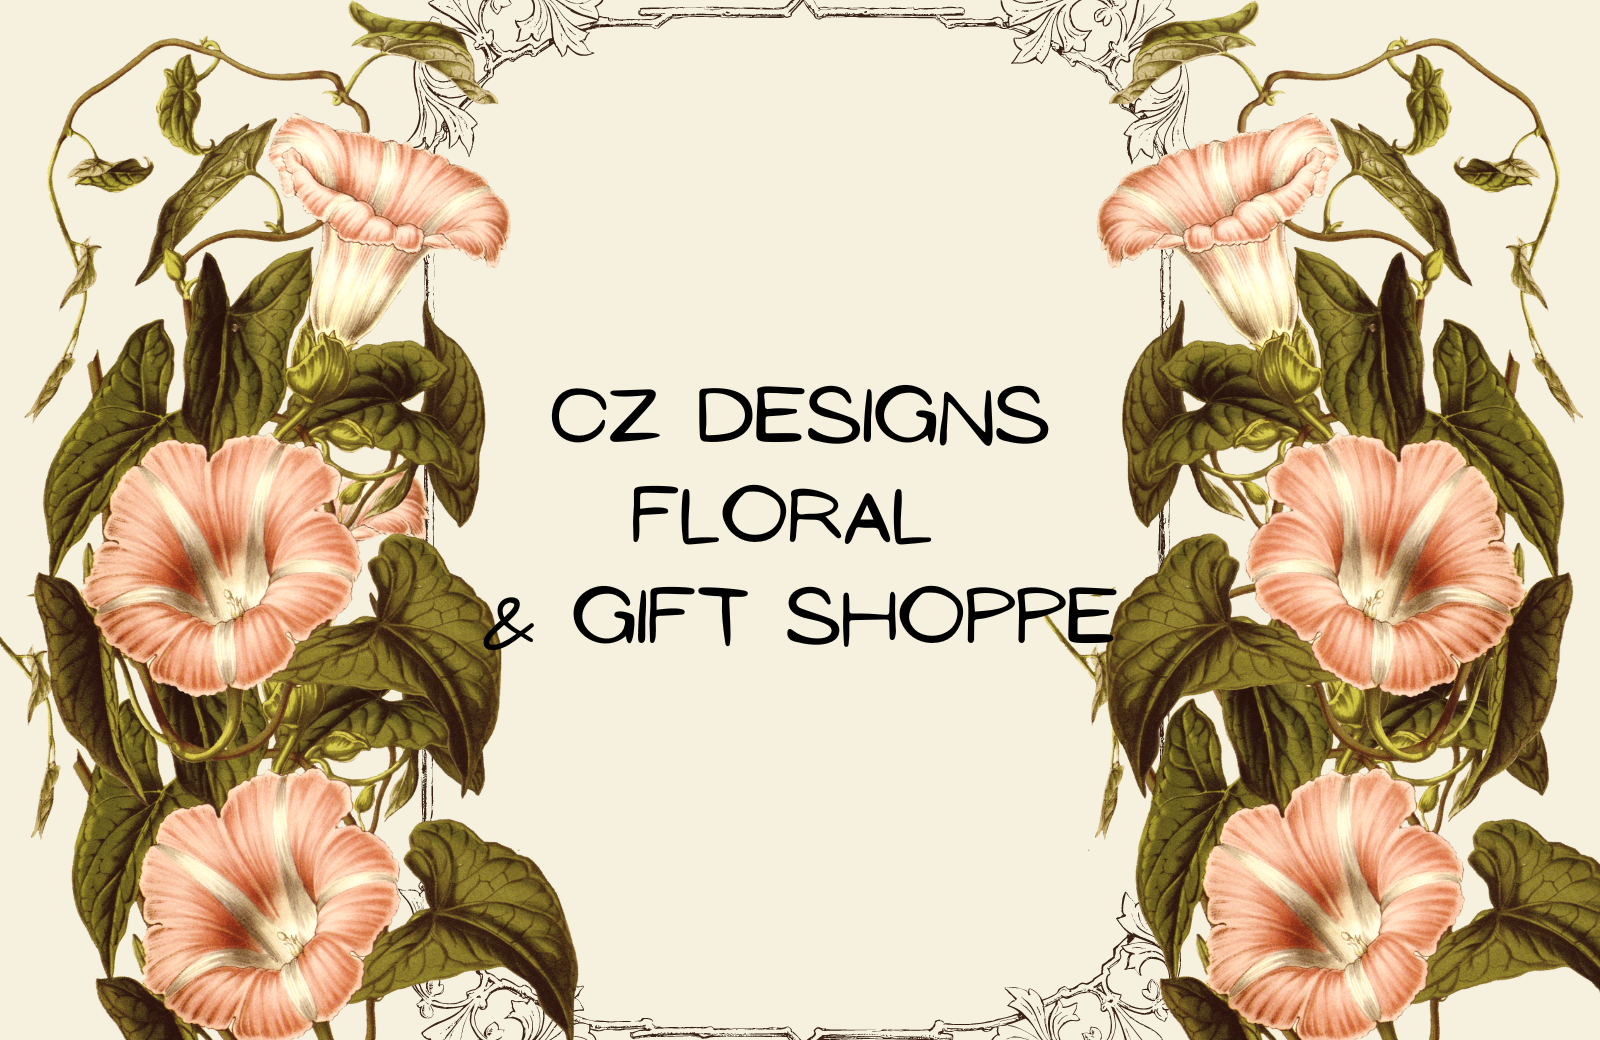 CZ Designs Floral & Gift Shoppe 307 Jackson St, Salem Indiana 47167